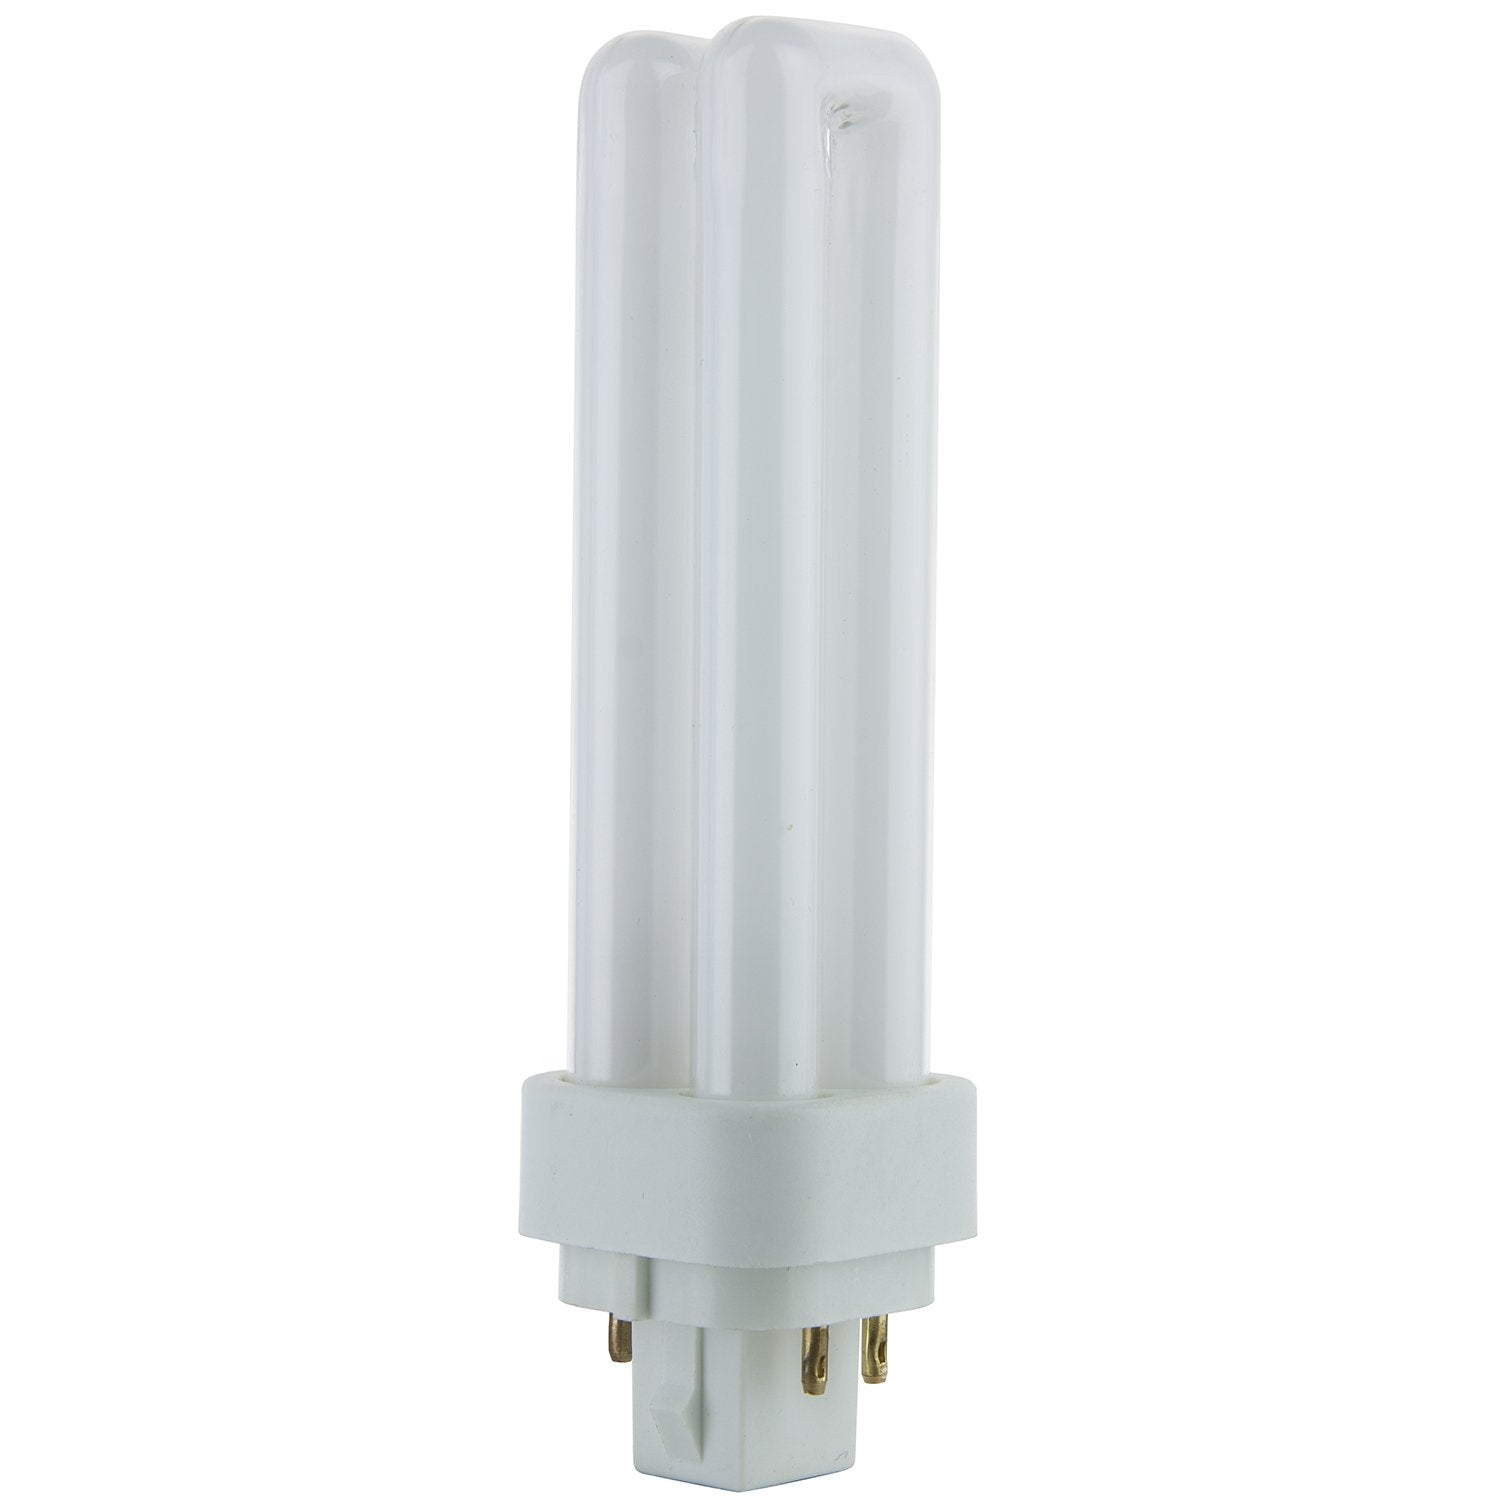 Sunlite 13-Watt Compact Fluorescent Plug-in 4-Pin Light Bulb  - Acceptable